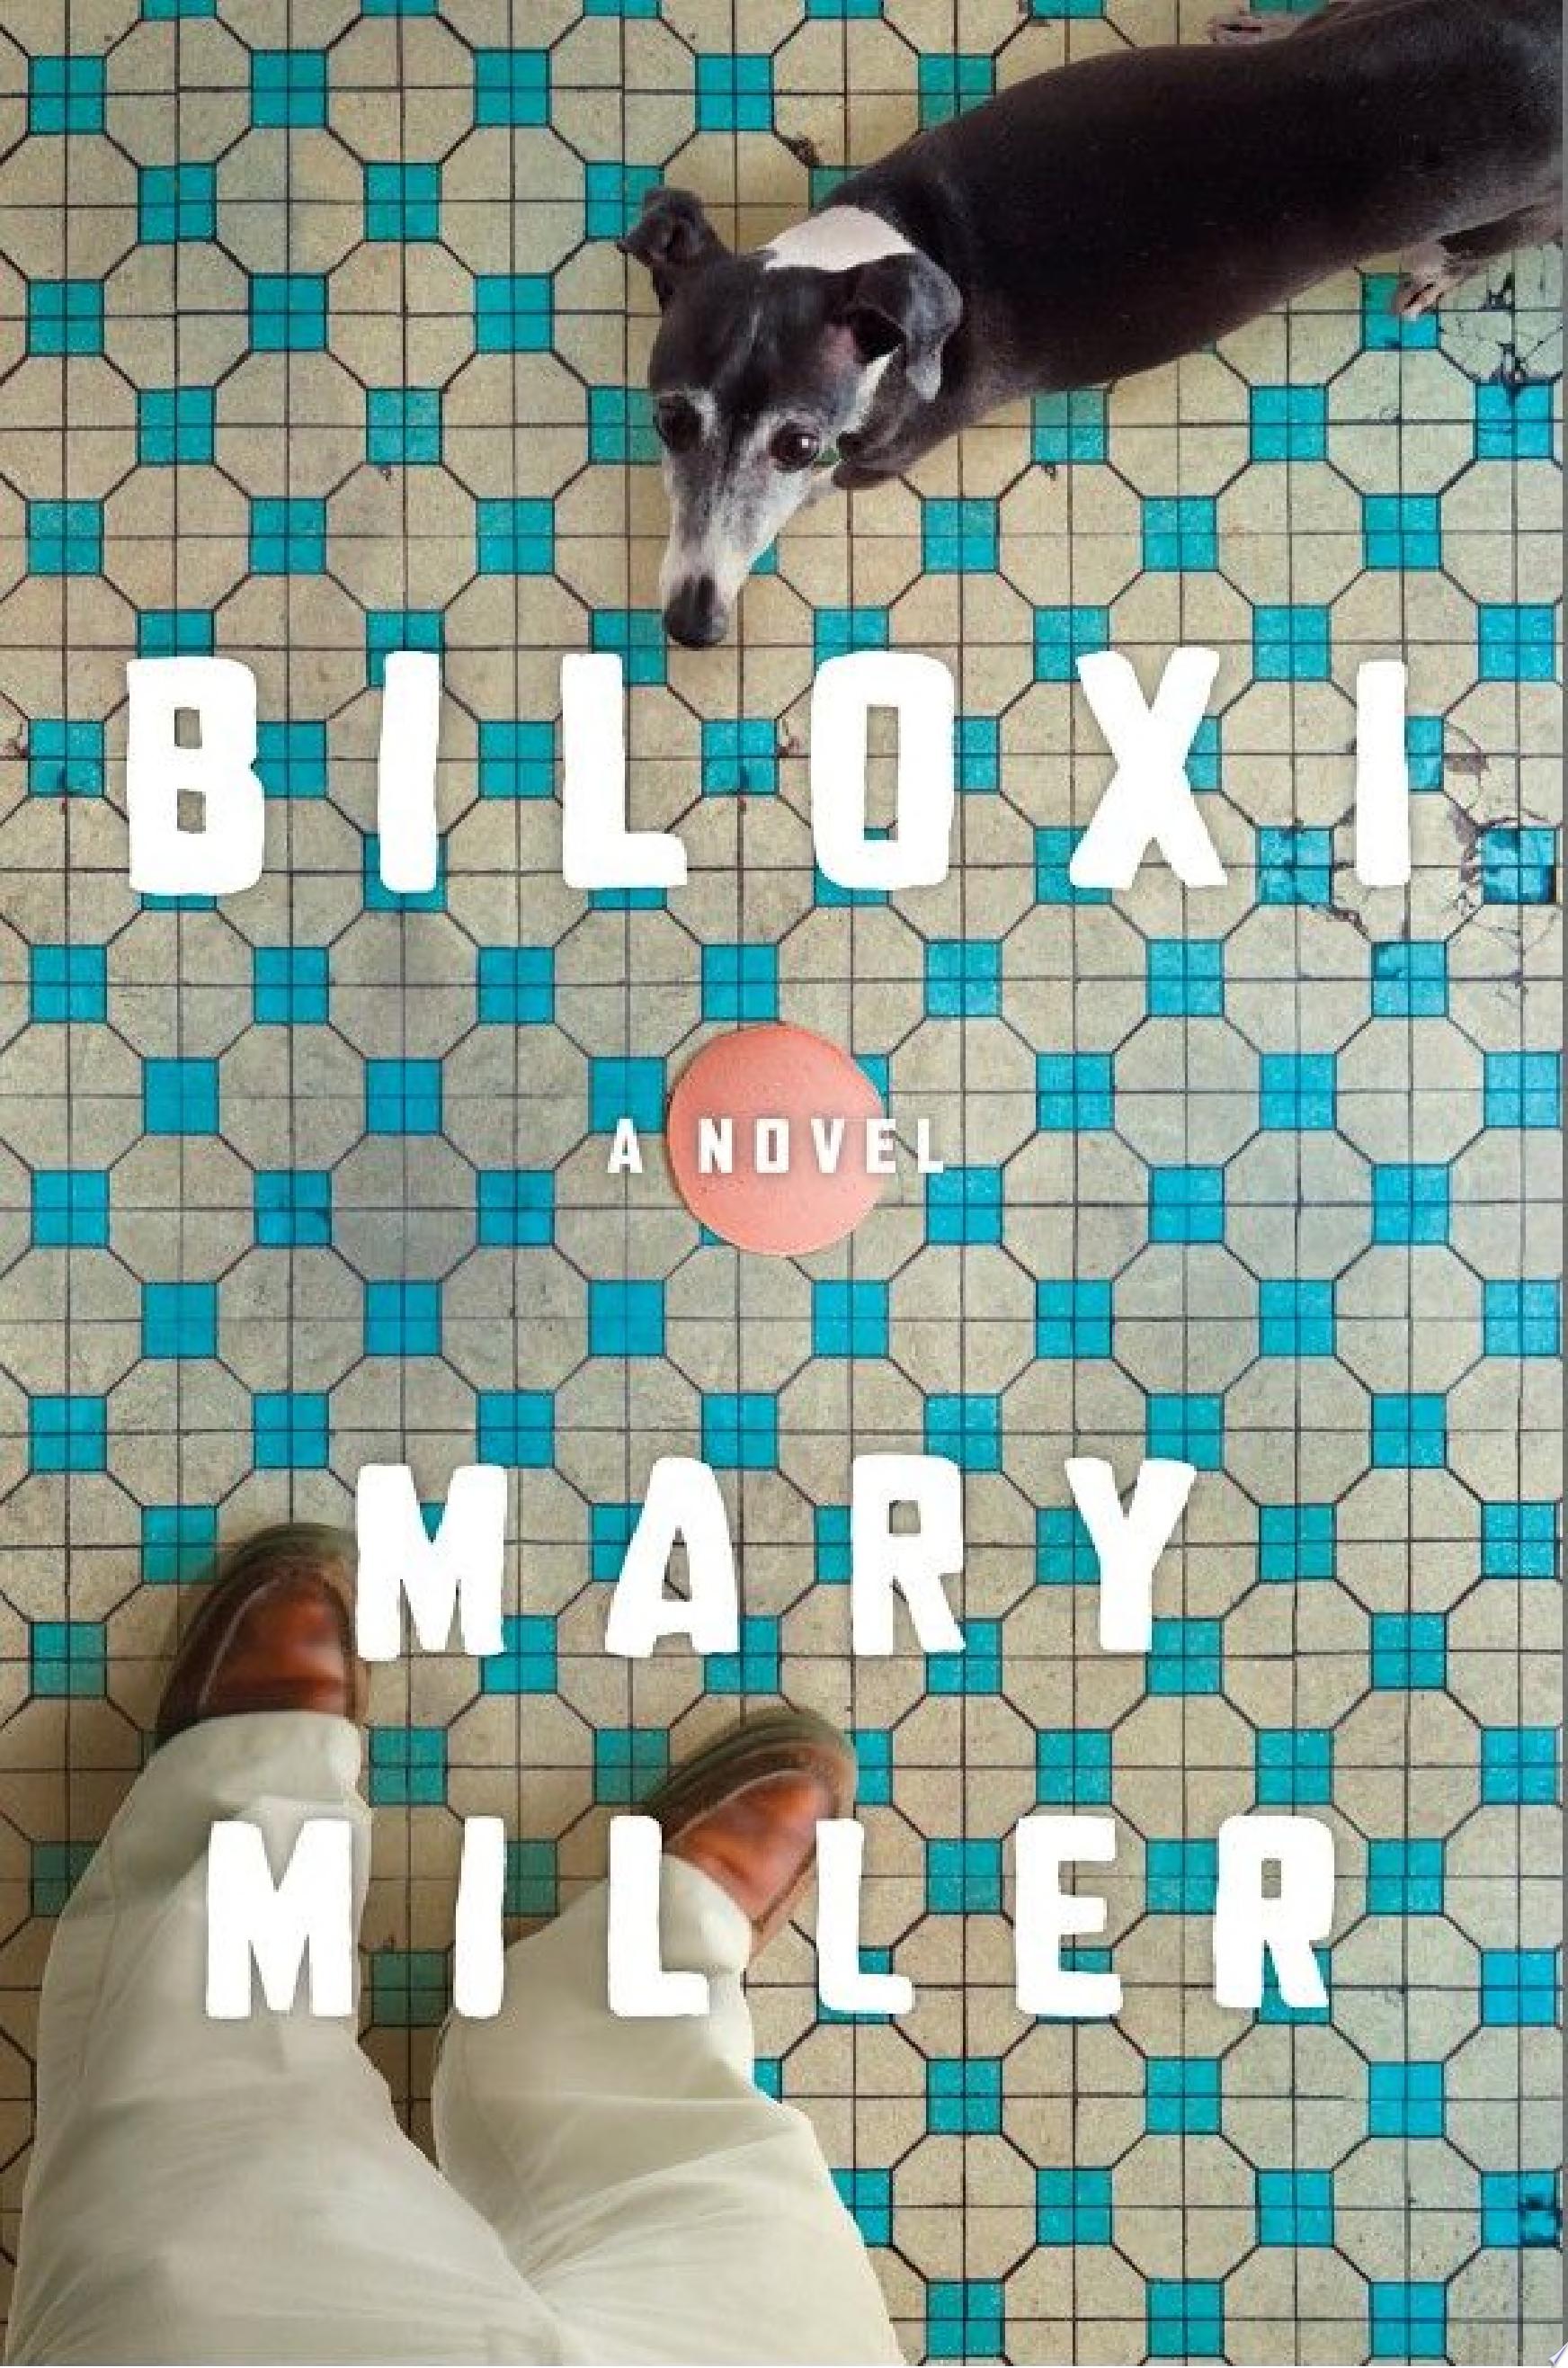 Image for "Biloxi: A Novel"